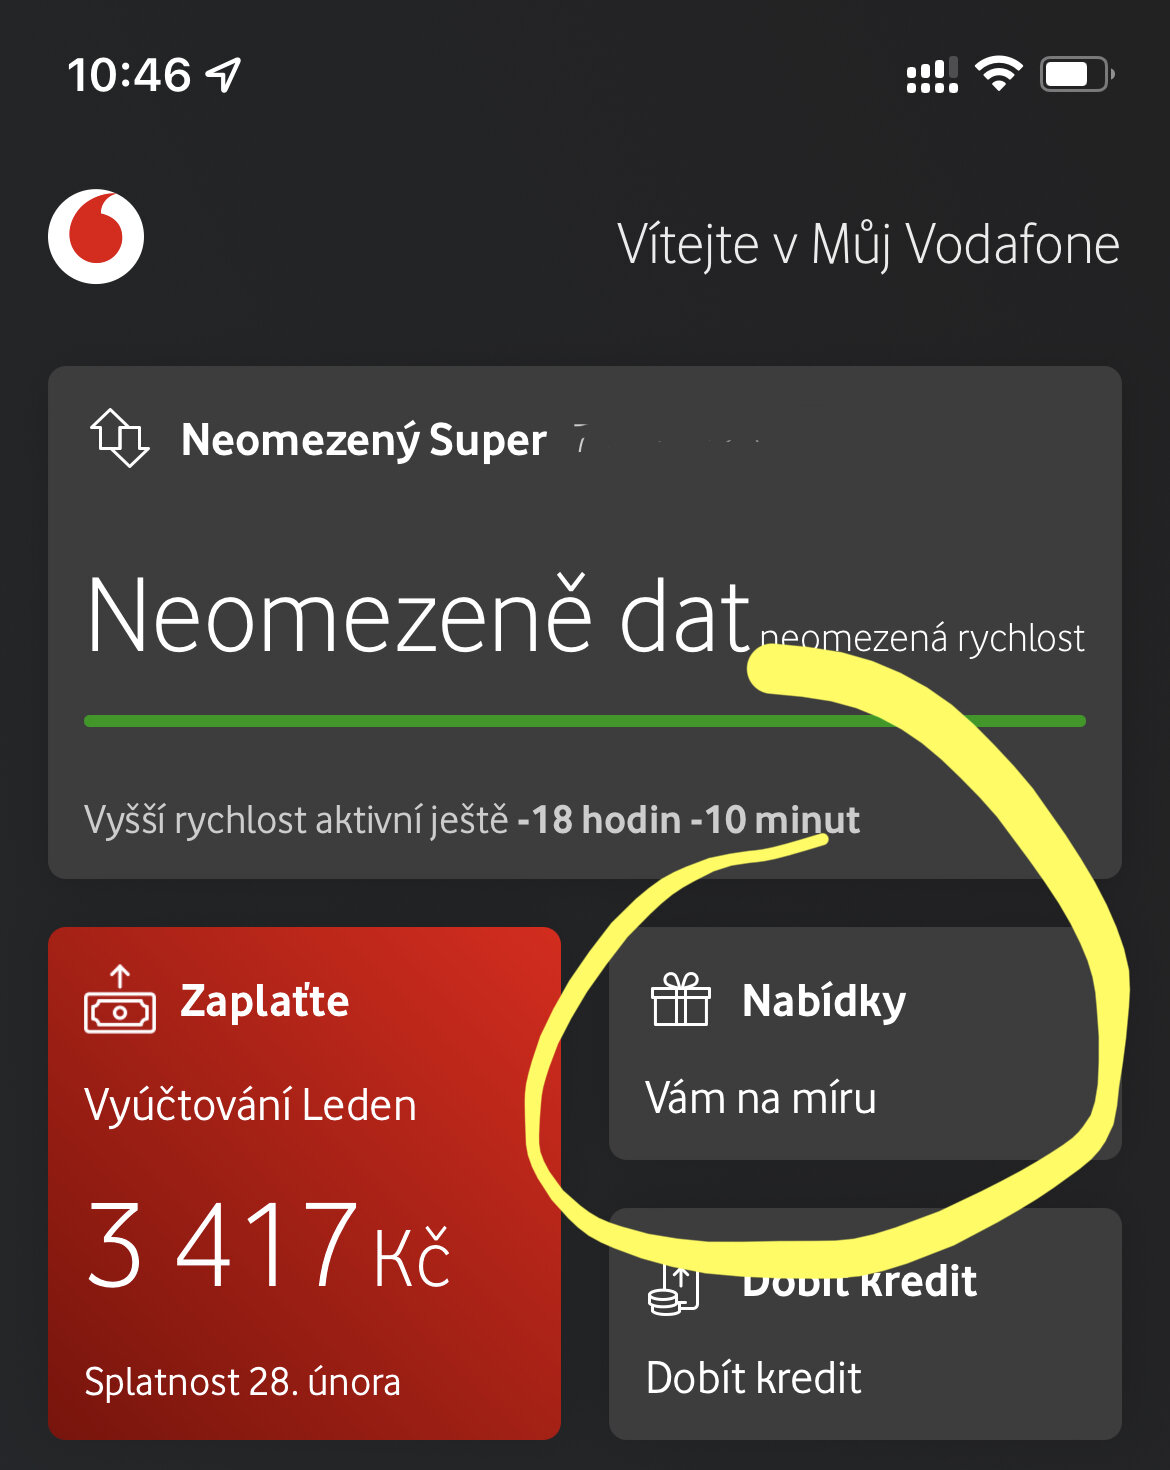 Jak aktivovat tarif Vodafone?